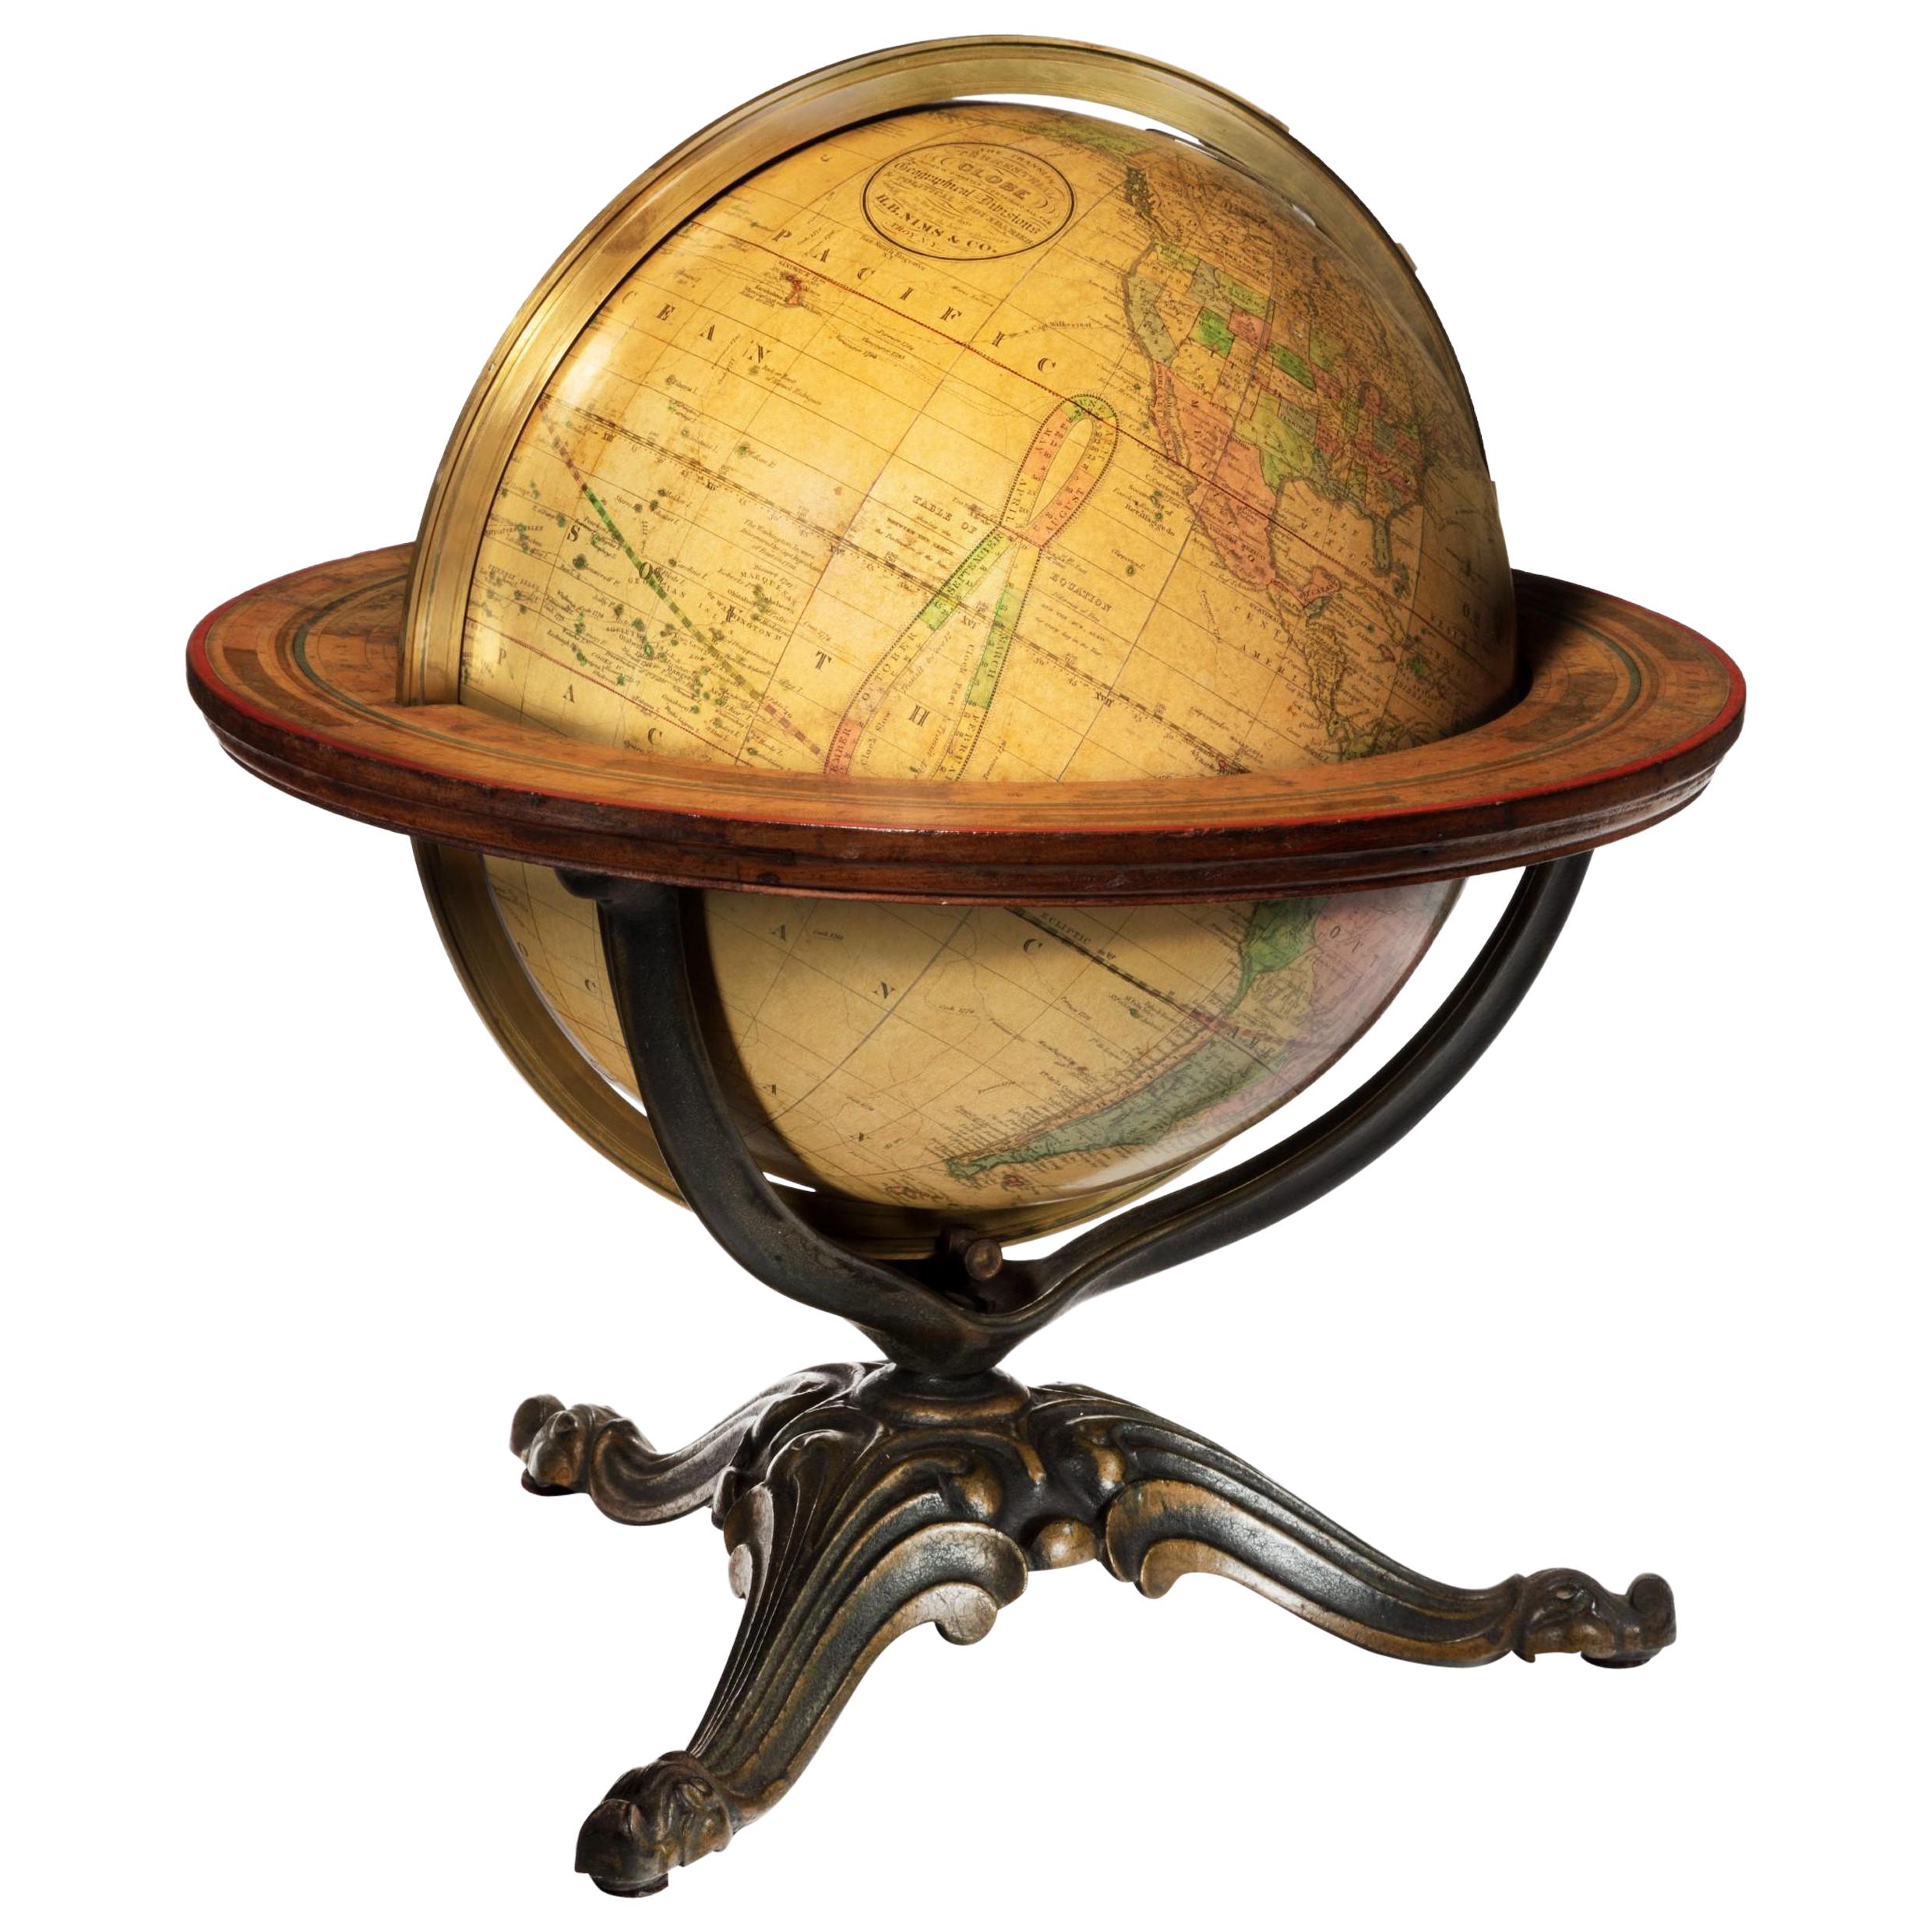 Franklin Terrestrial Table Globe by Nims & Co, New York